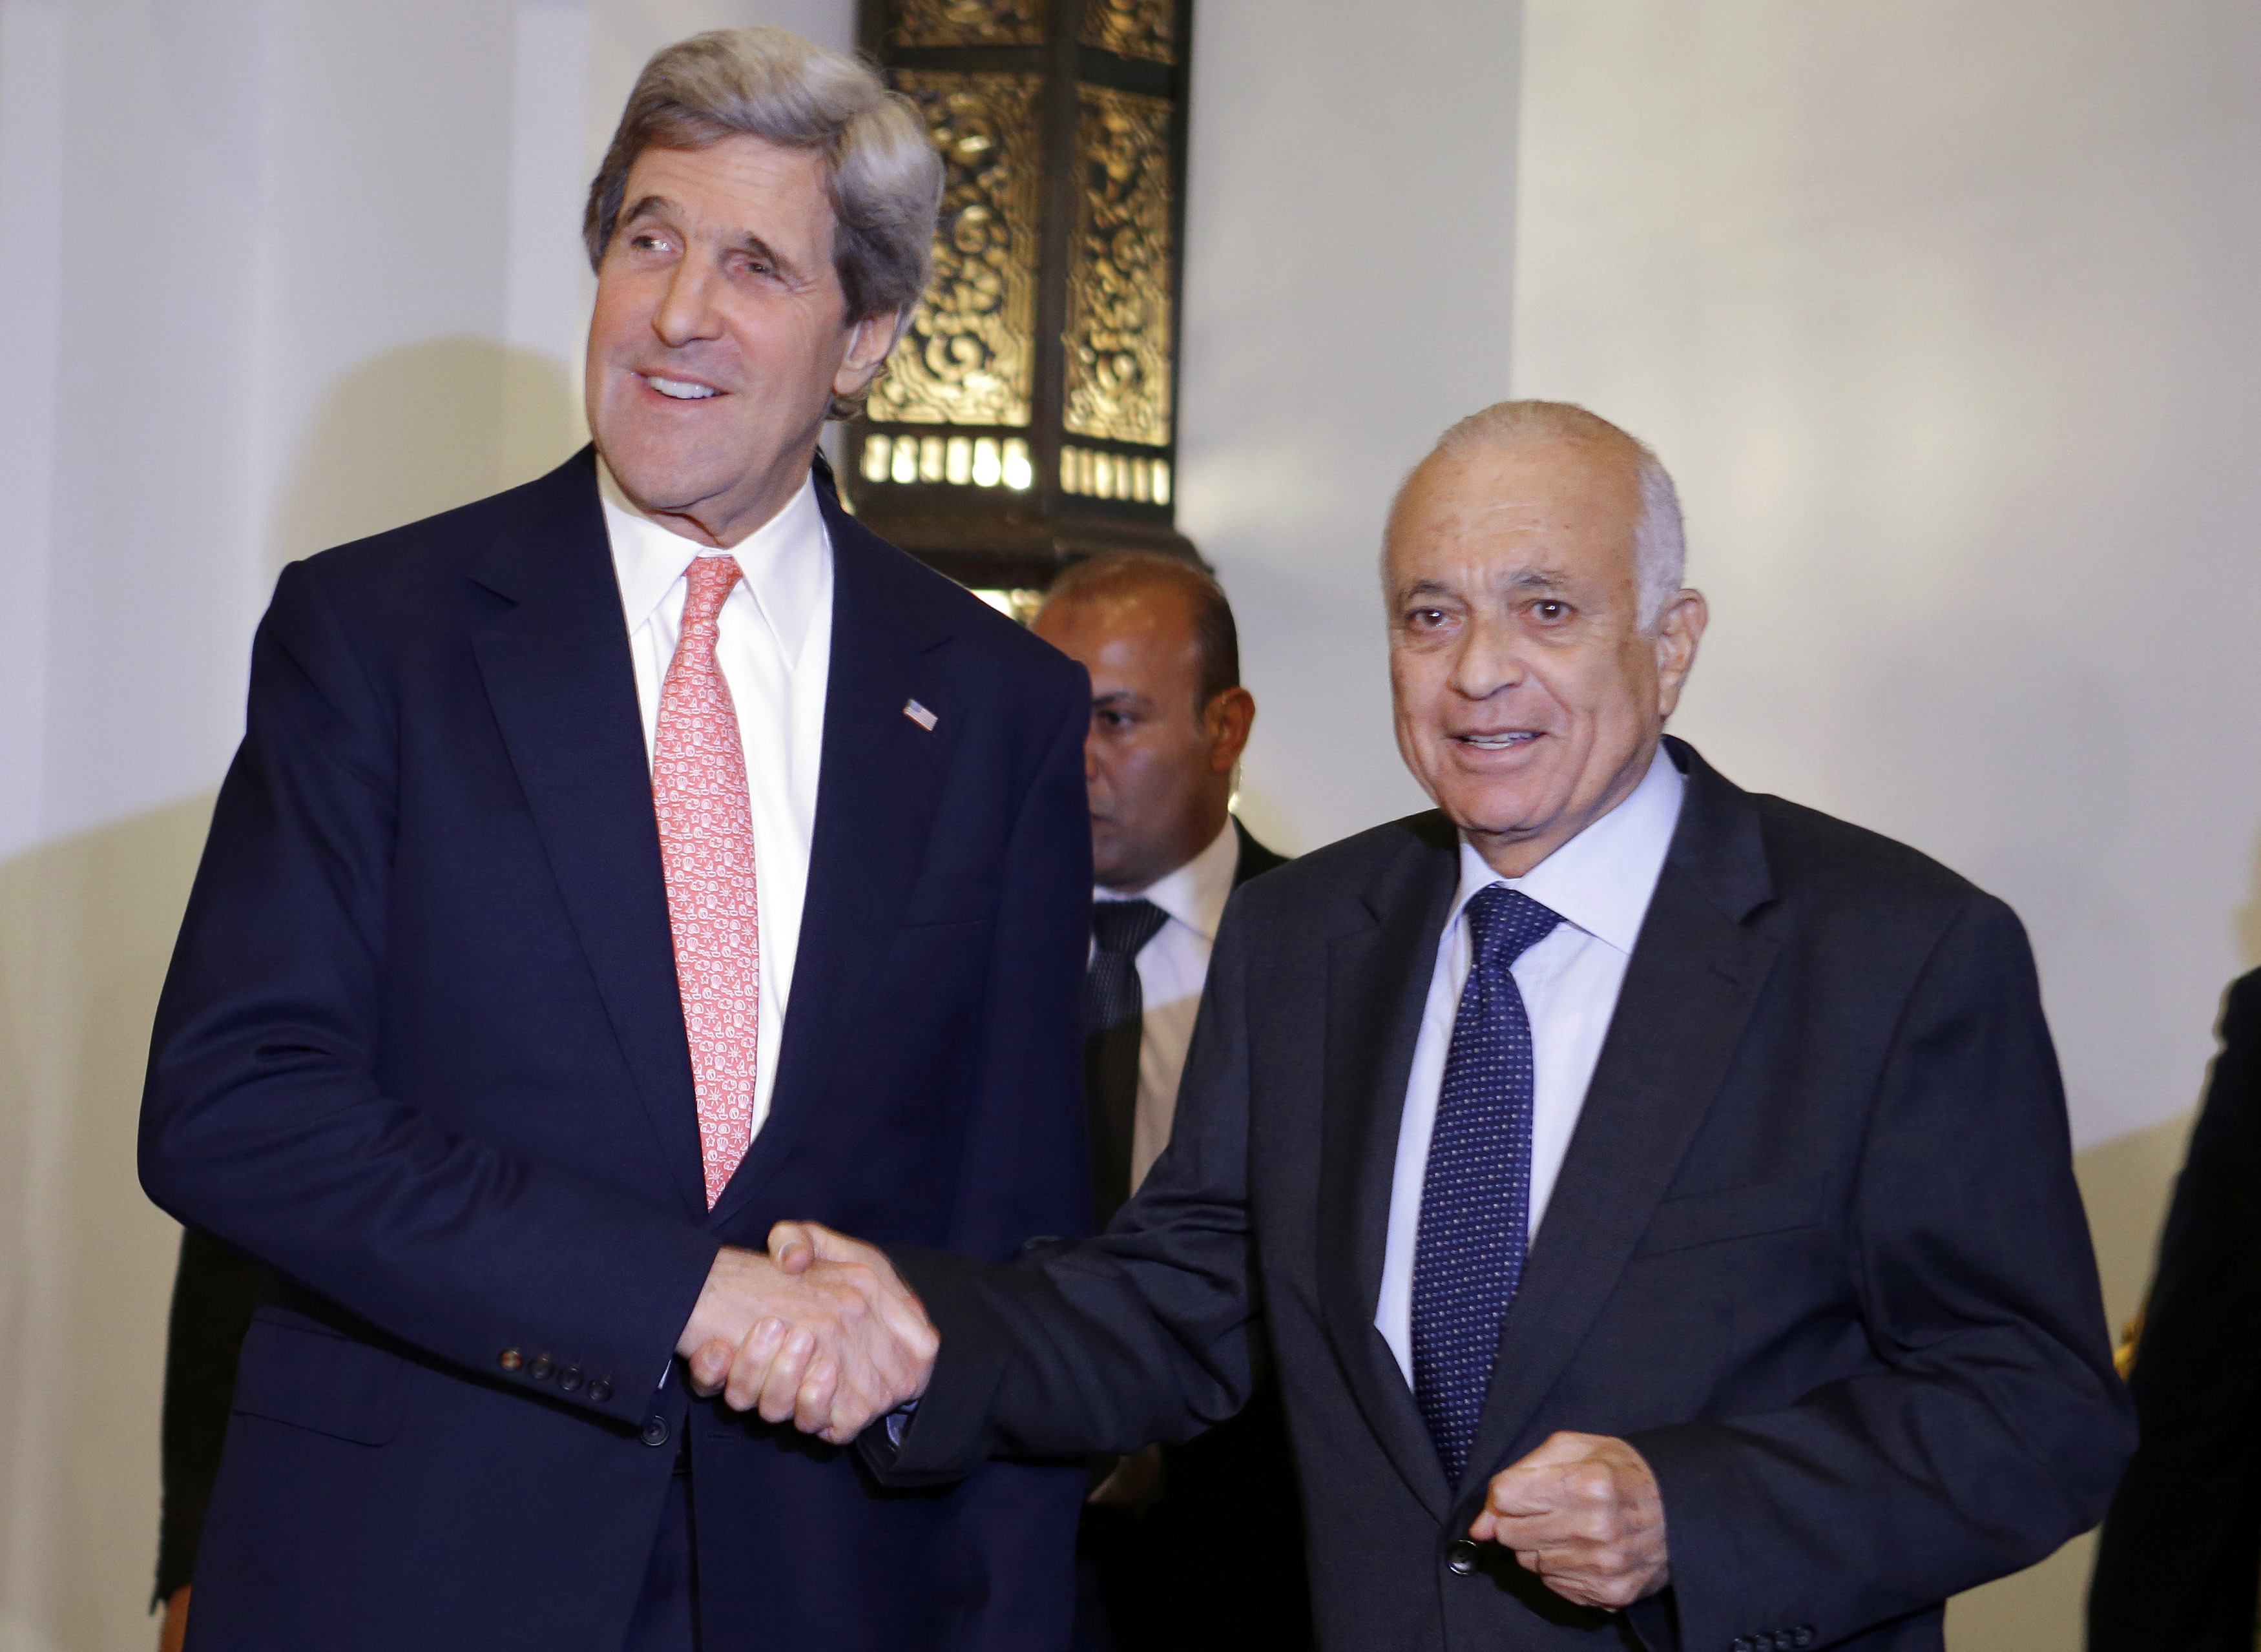 Kerry, Arabi Discuss Ways to Counter ISIL Terrorism